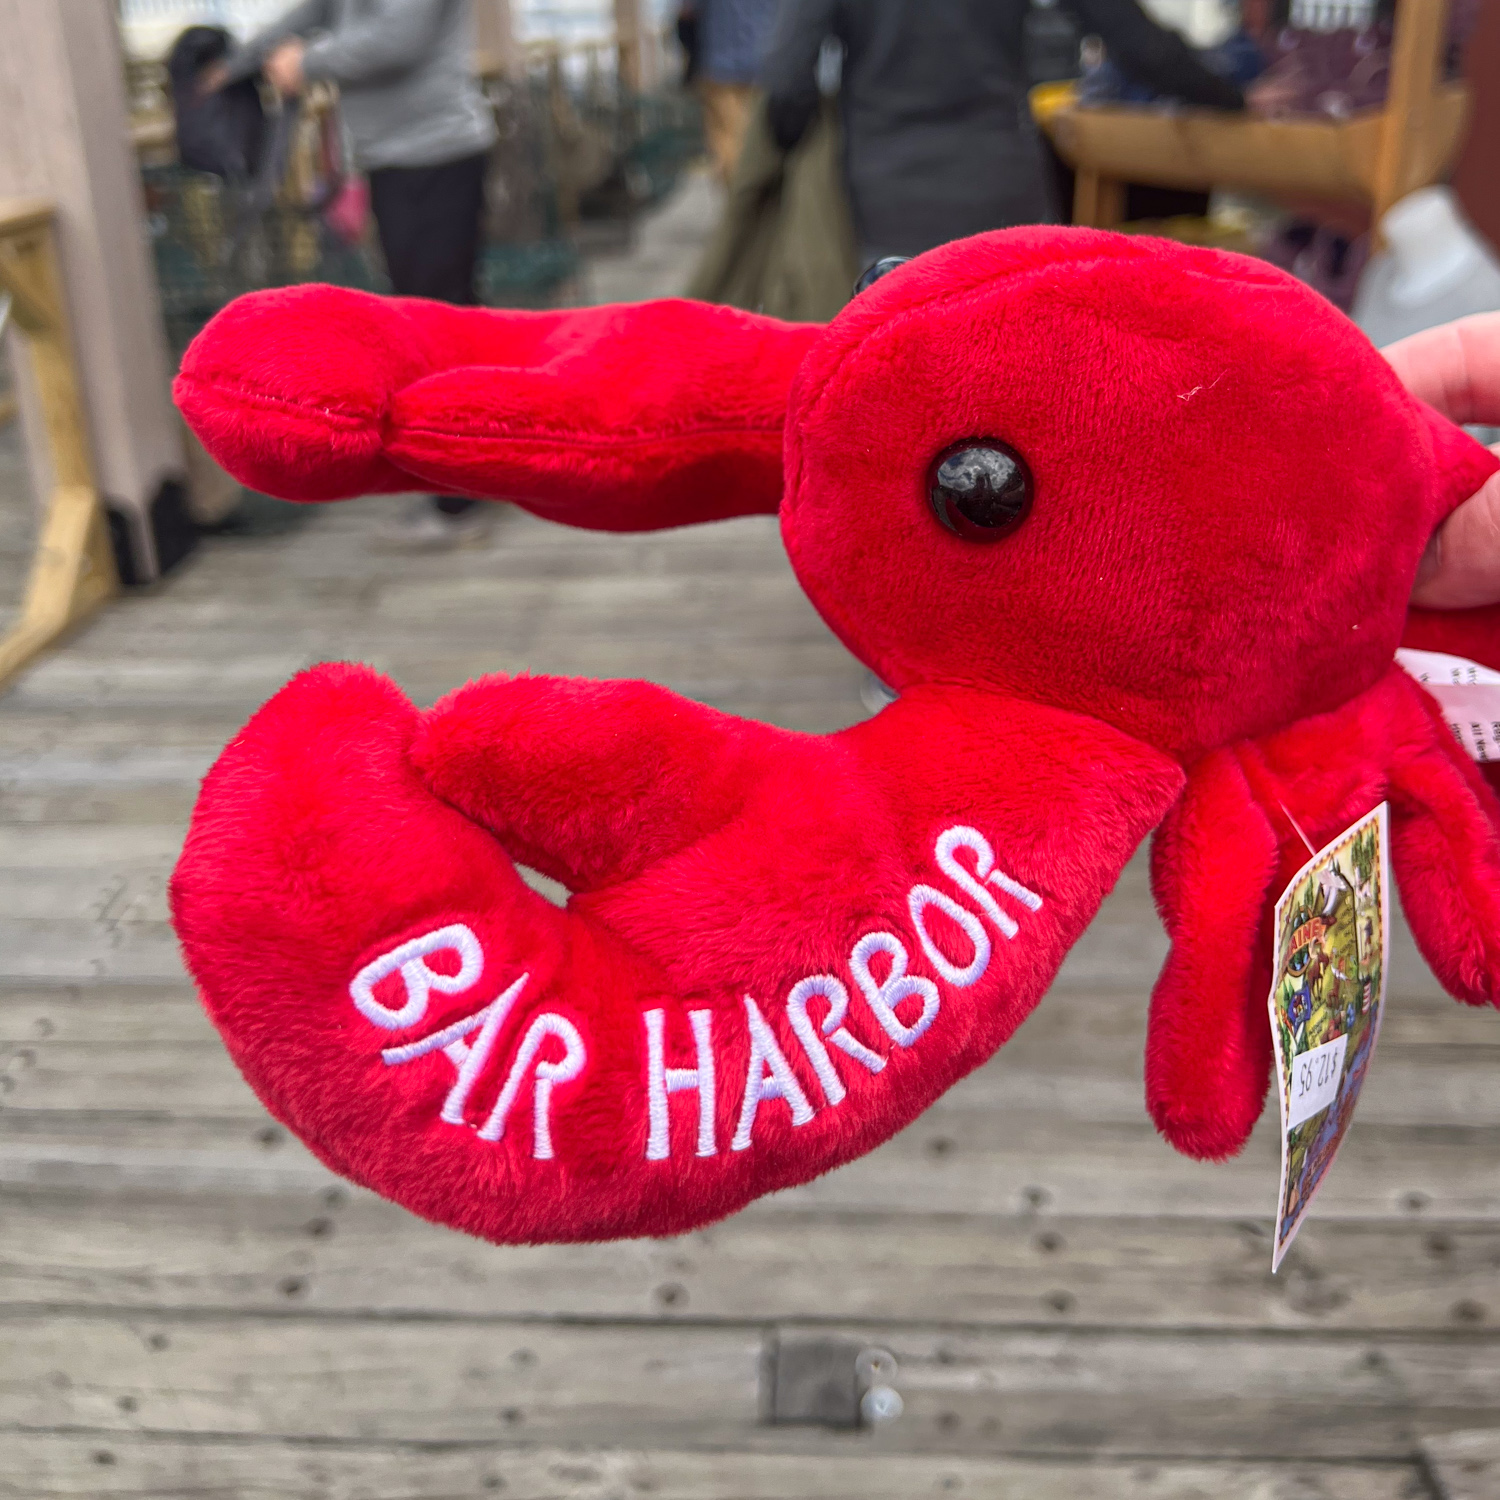 Bar Harbor souvenir lobster